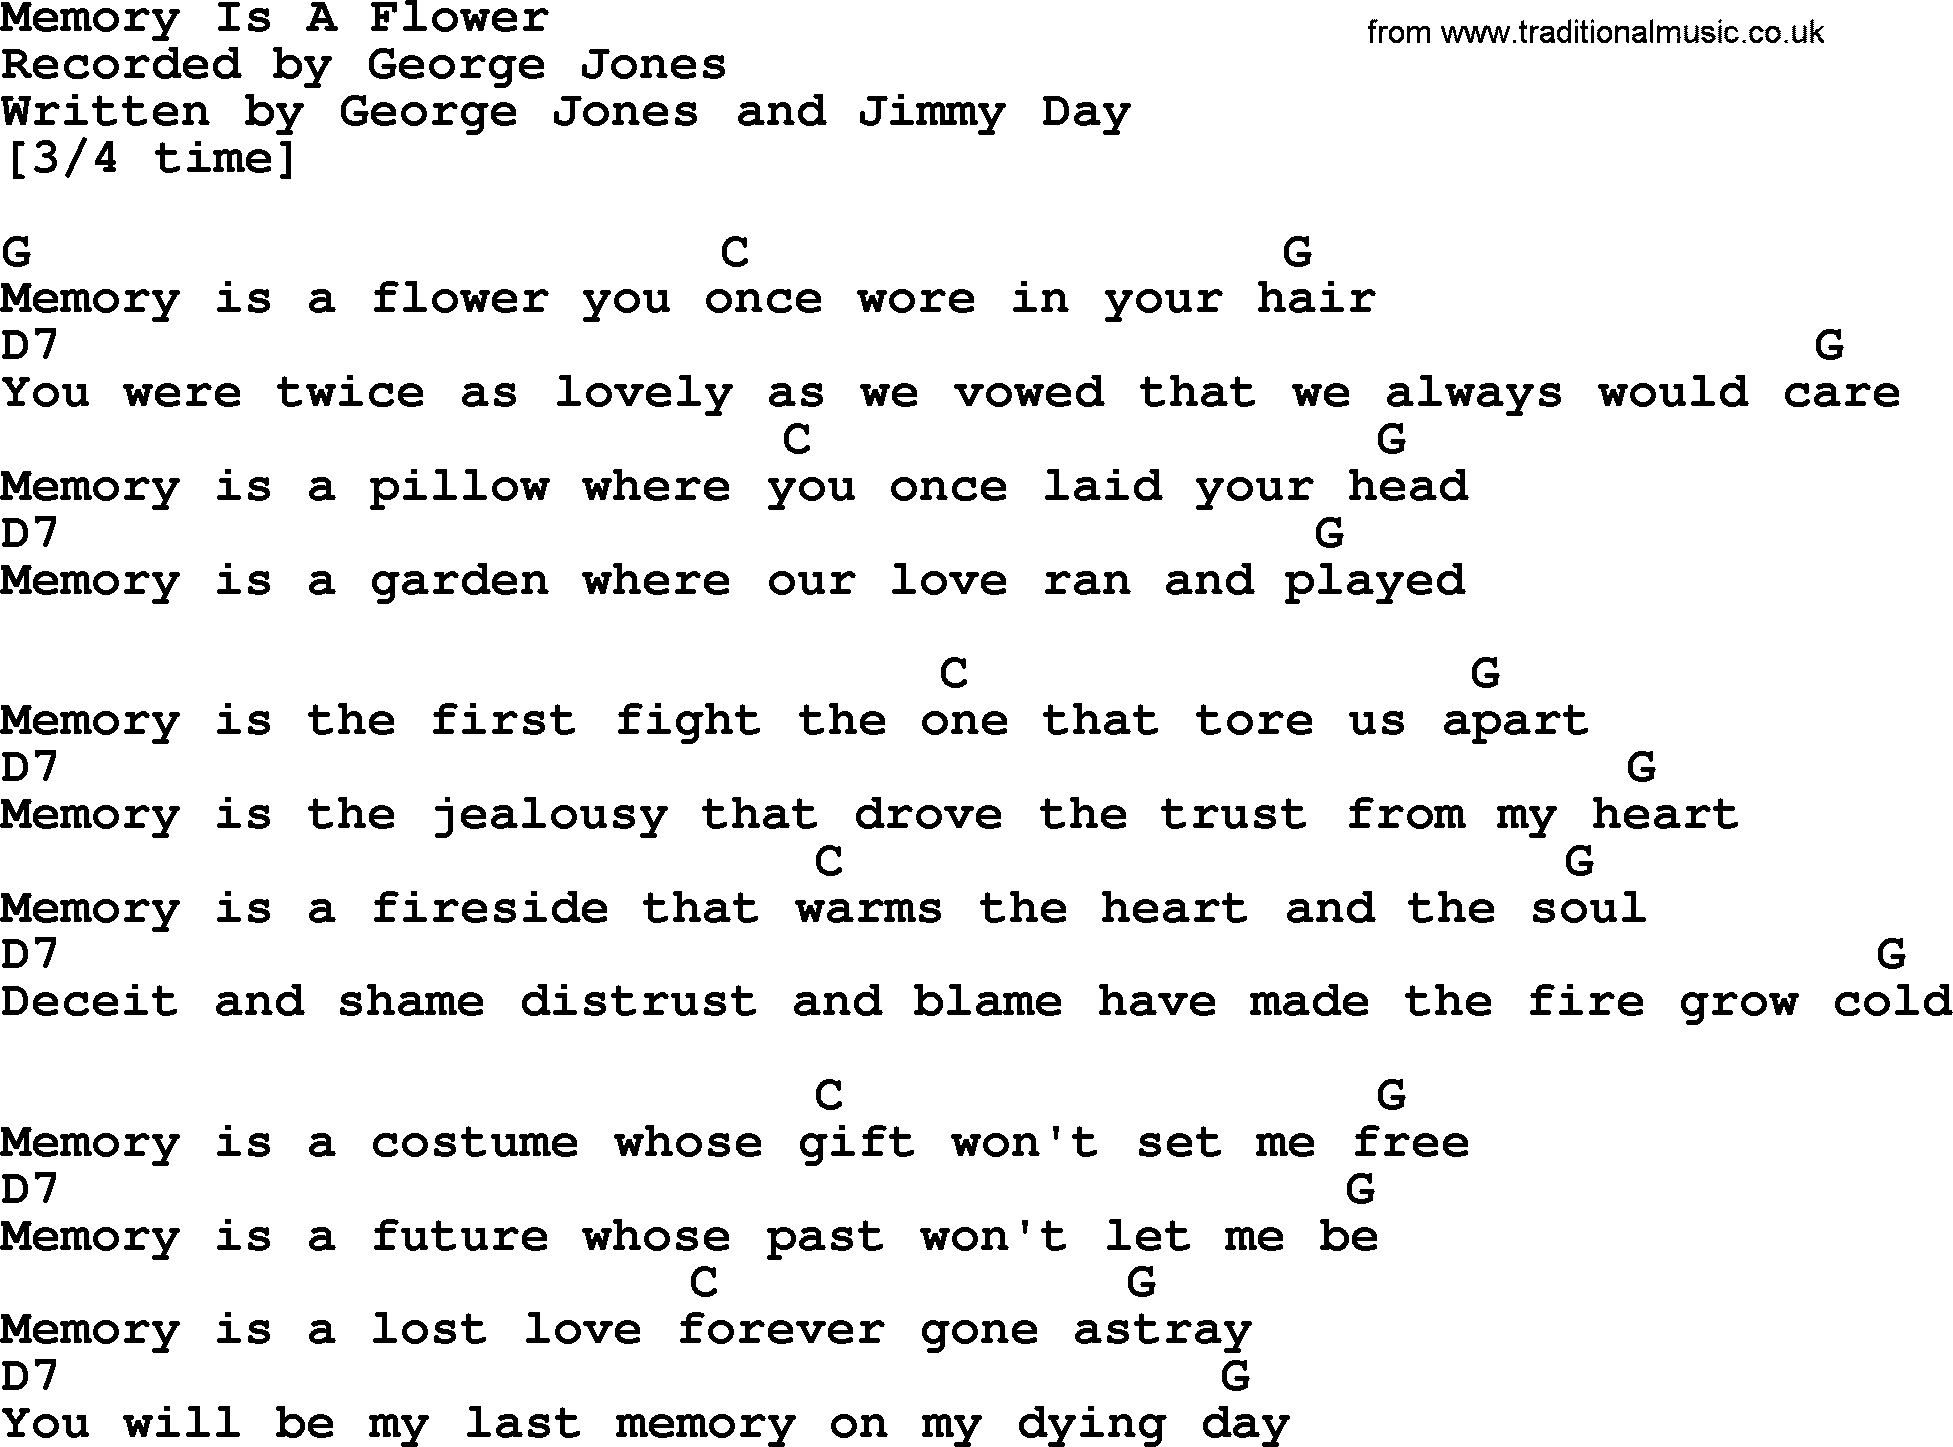 George Jones song: Memory Is A Flower, lyrics and chords